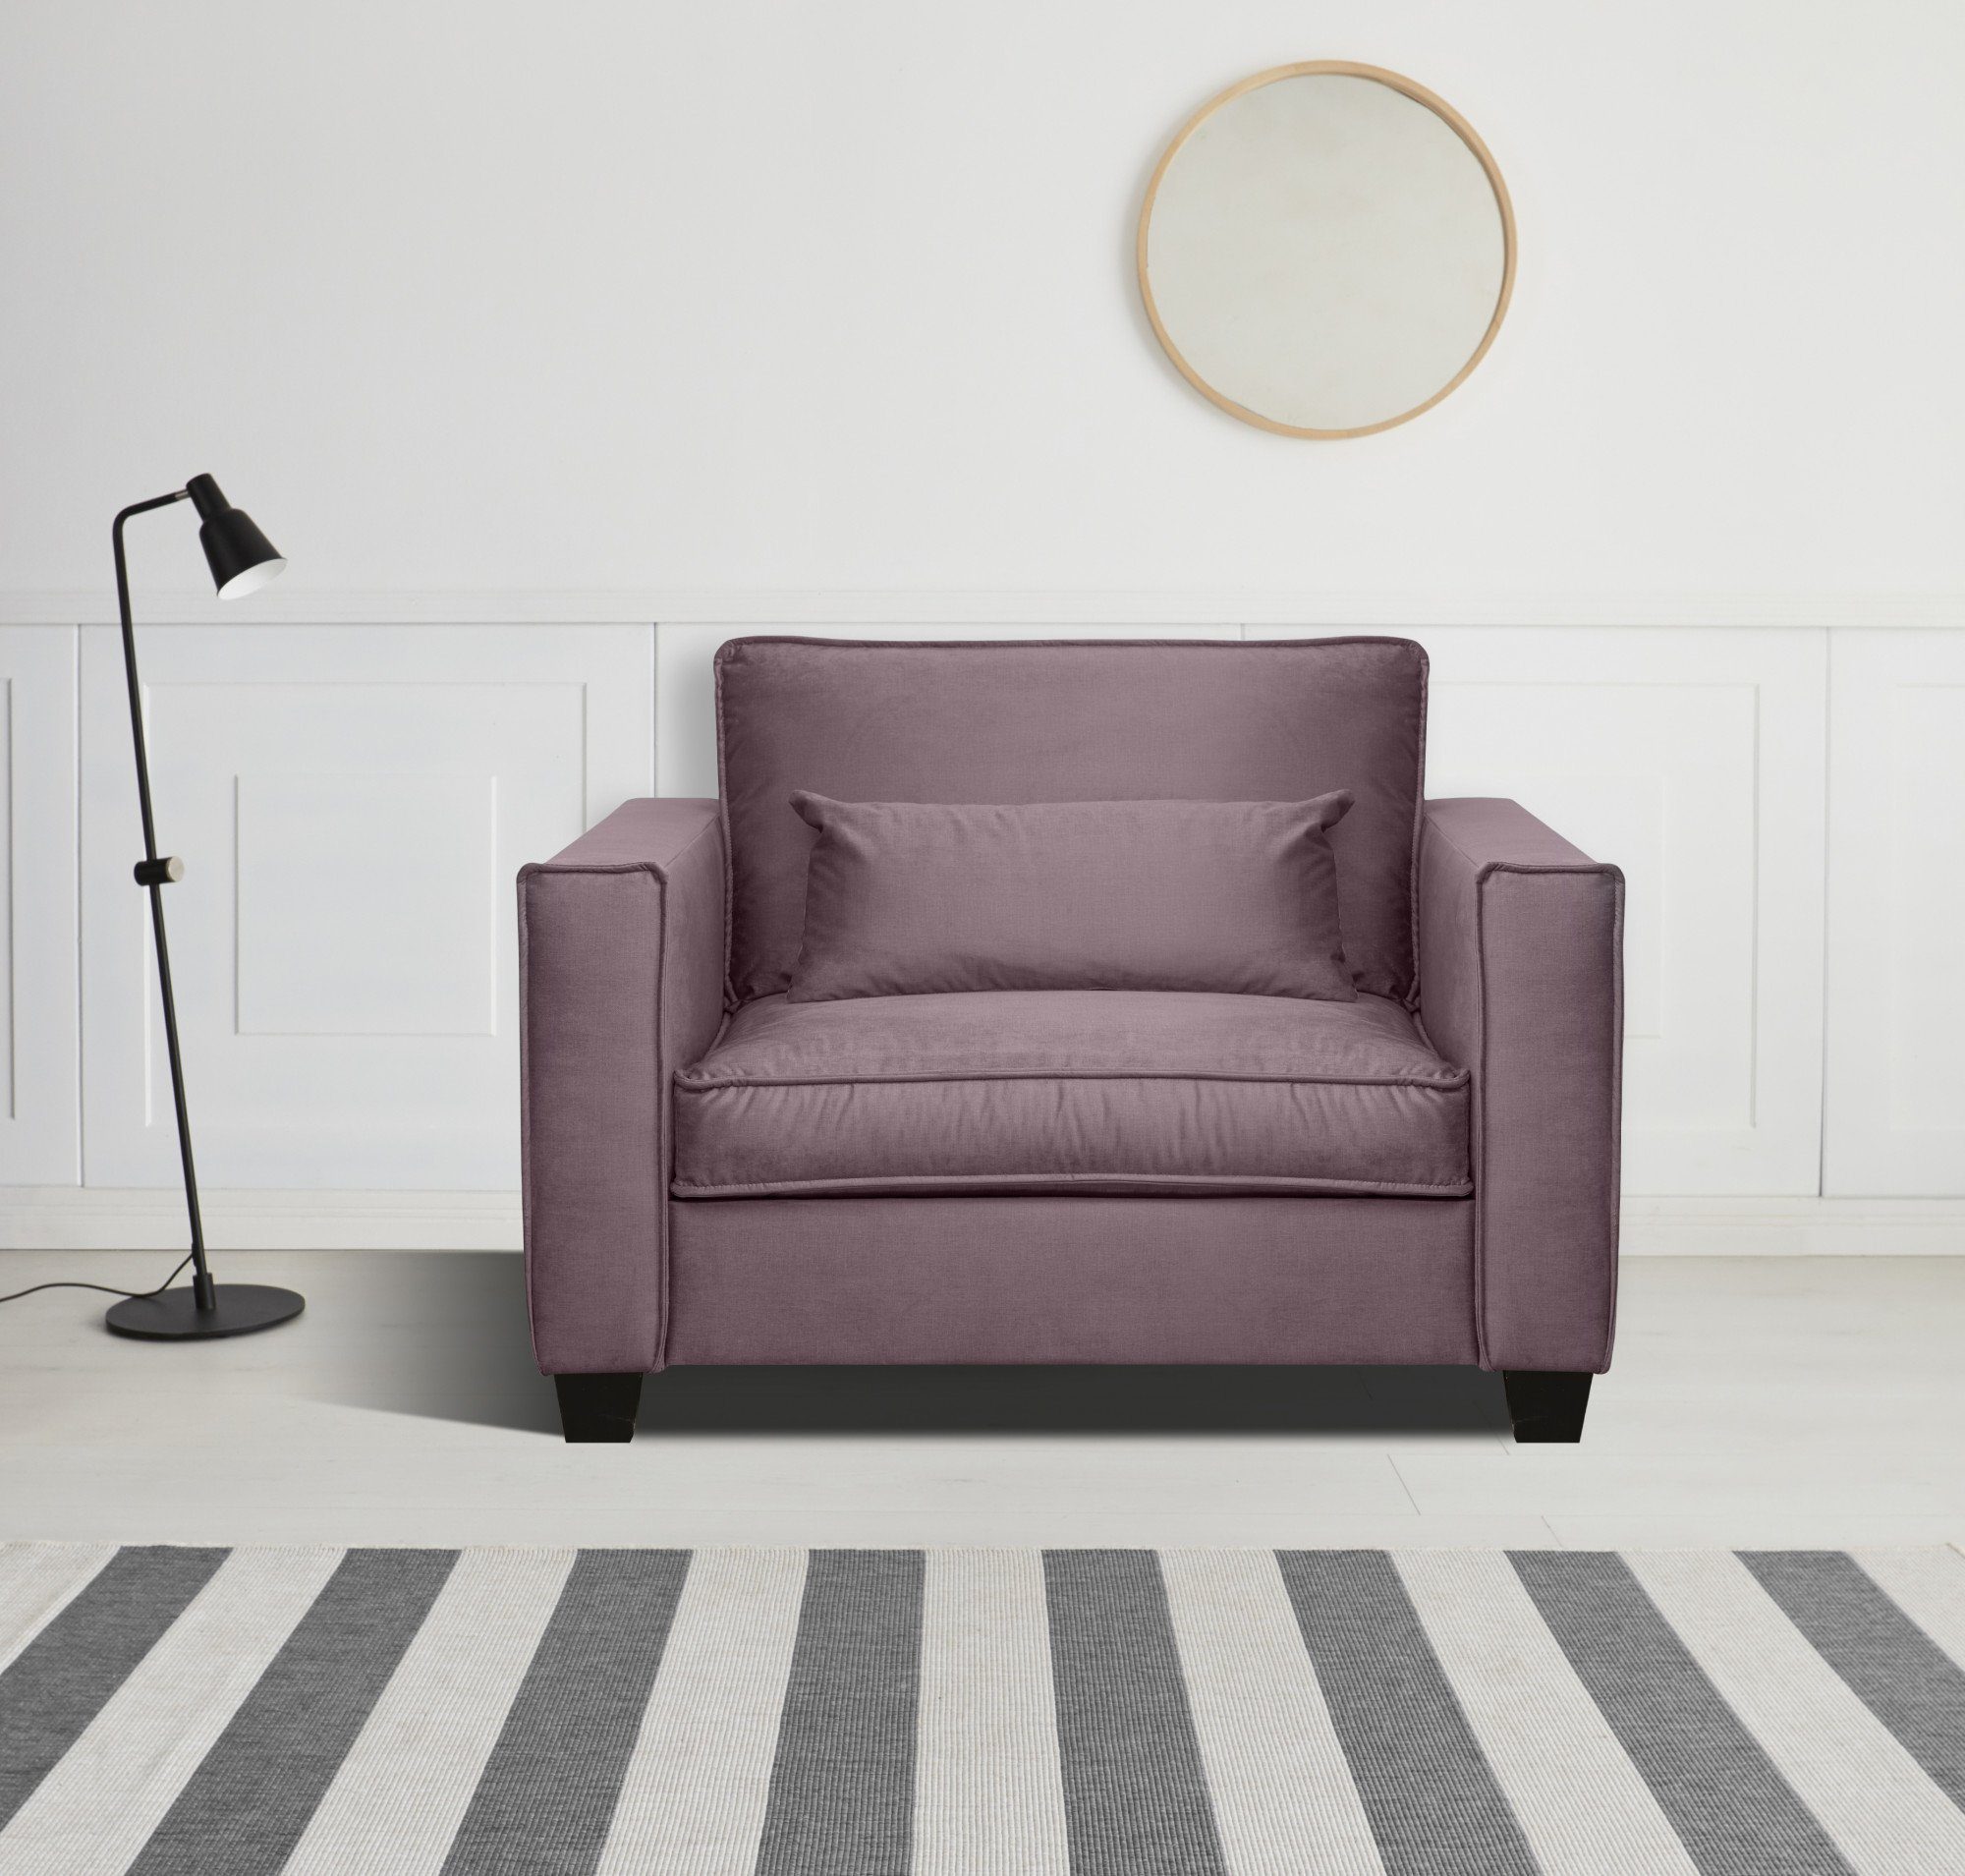 Home affaire Sessel Tilques, bequeme Sitzgelegenheiten, viele Farben verfügbar violet pink | Einzelsessel